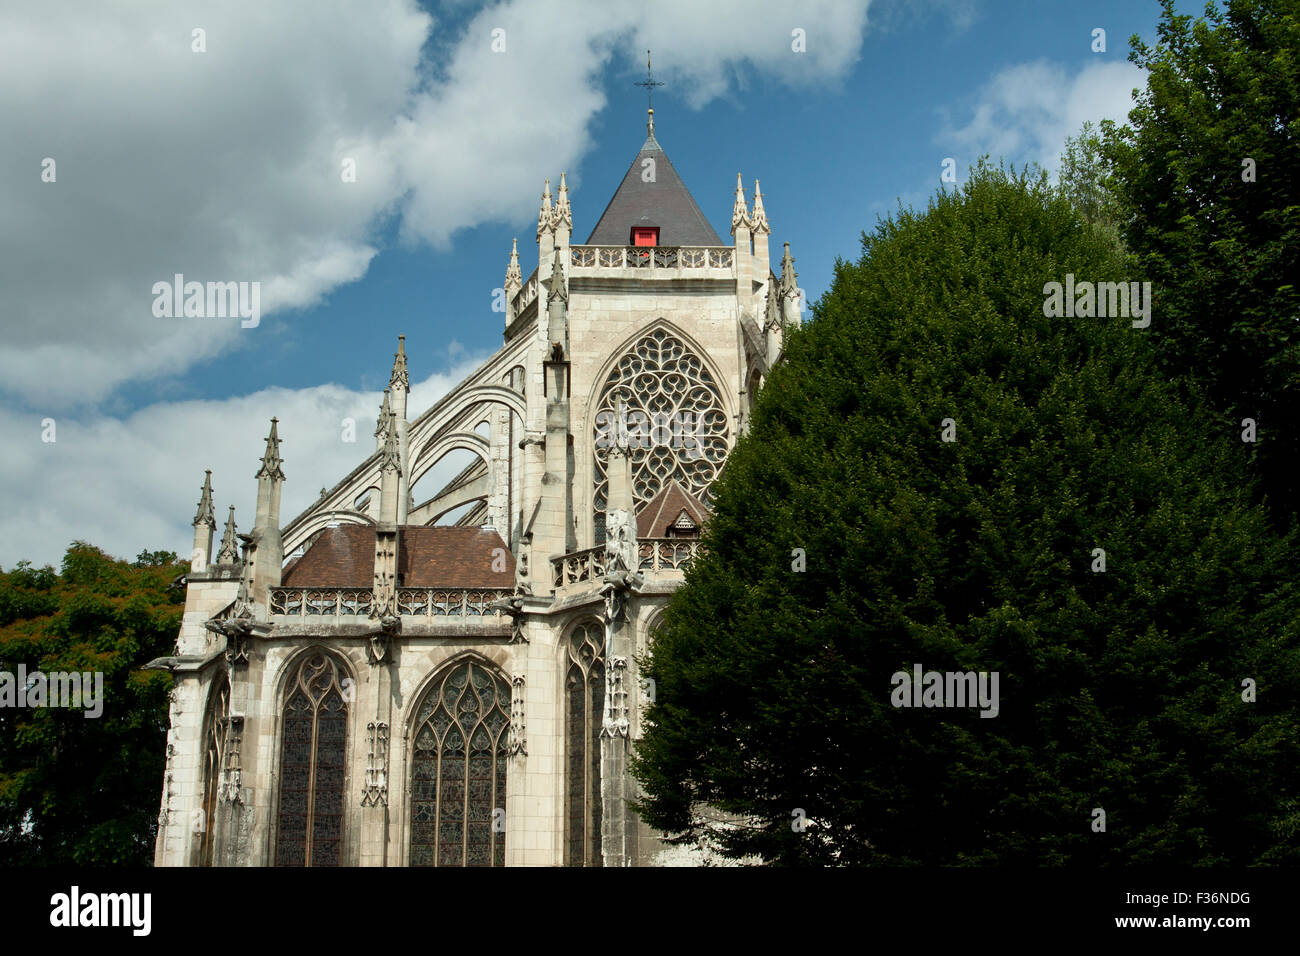 Saint Etienne church in Beauvais, France Stock Photo